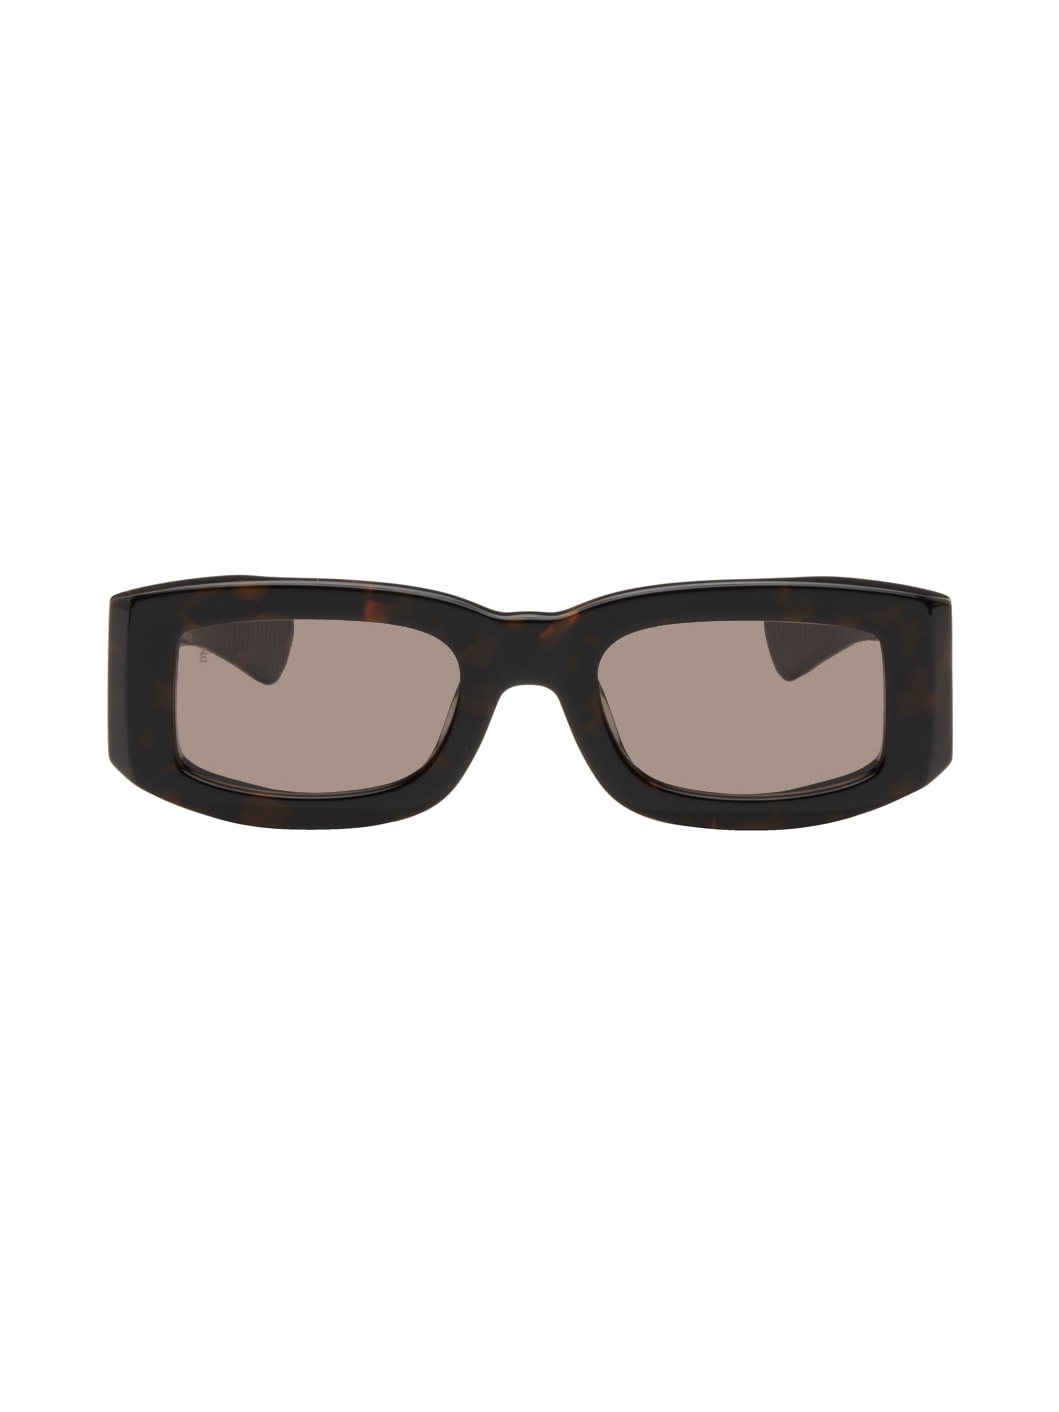 Tortoiseshell Edition Sunglasses - 1